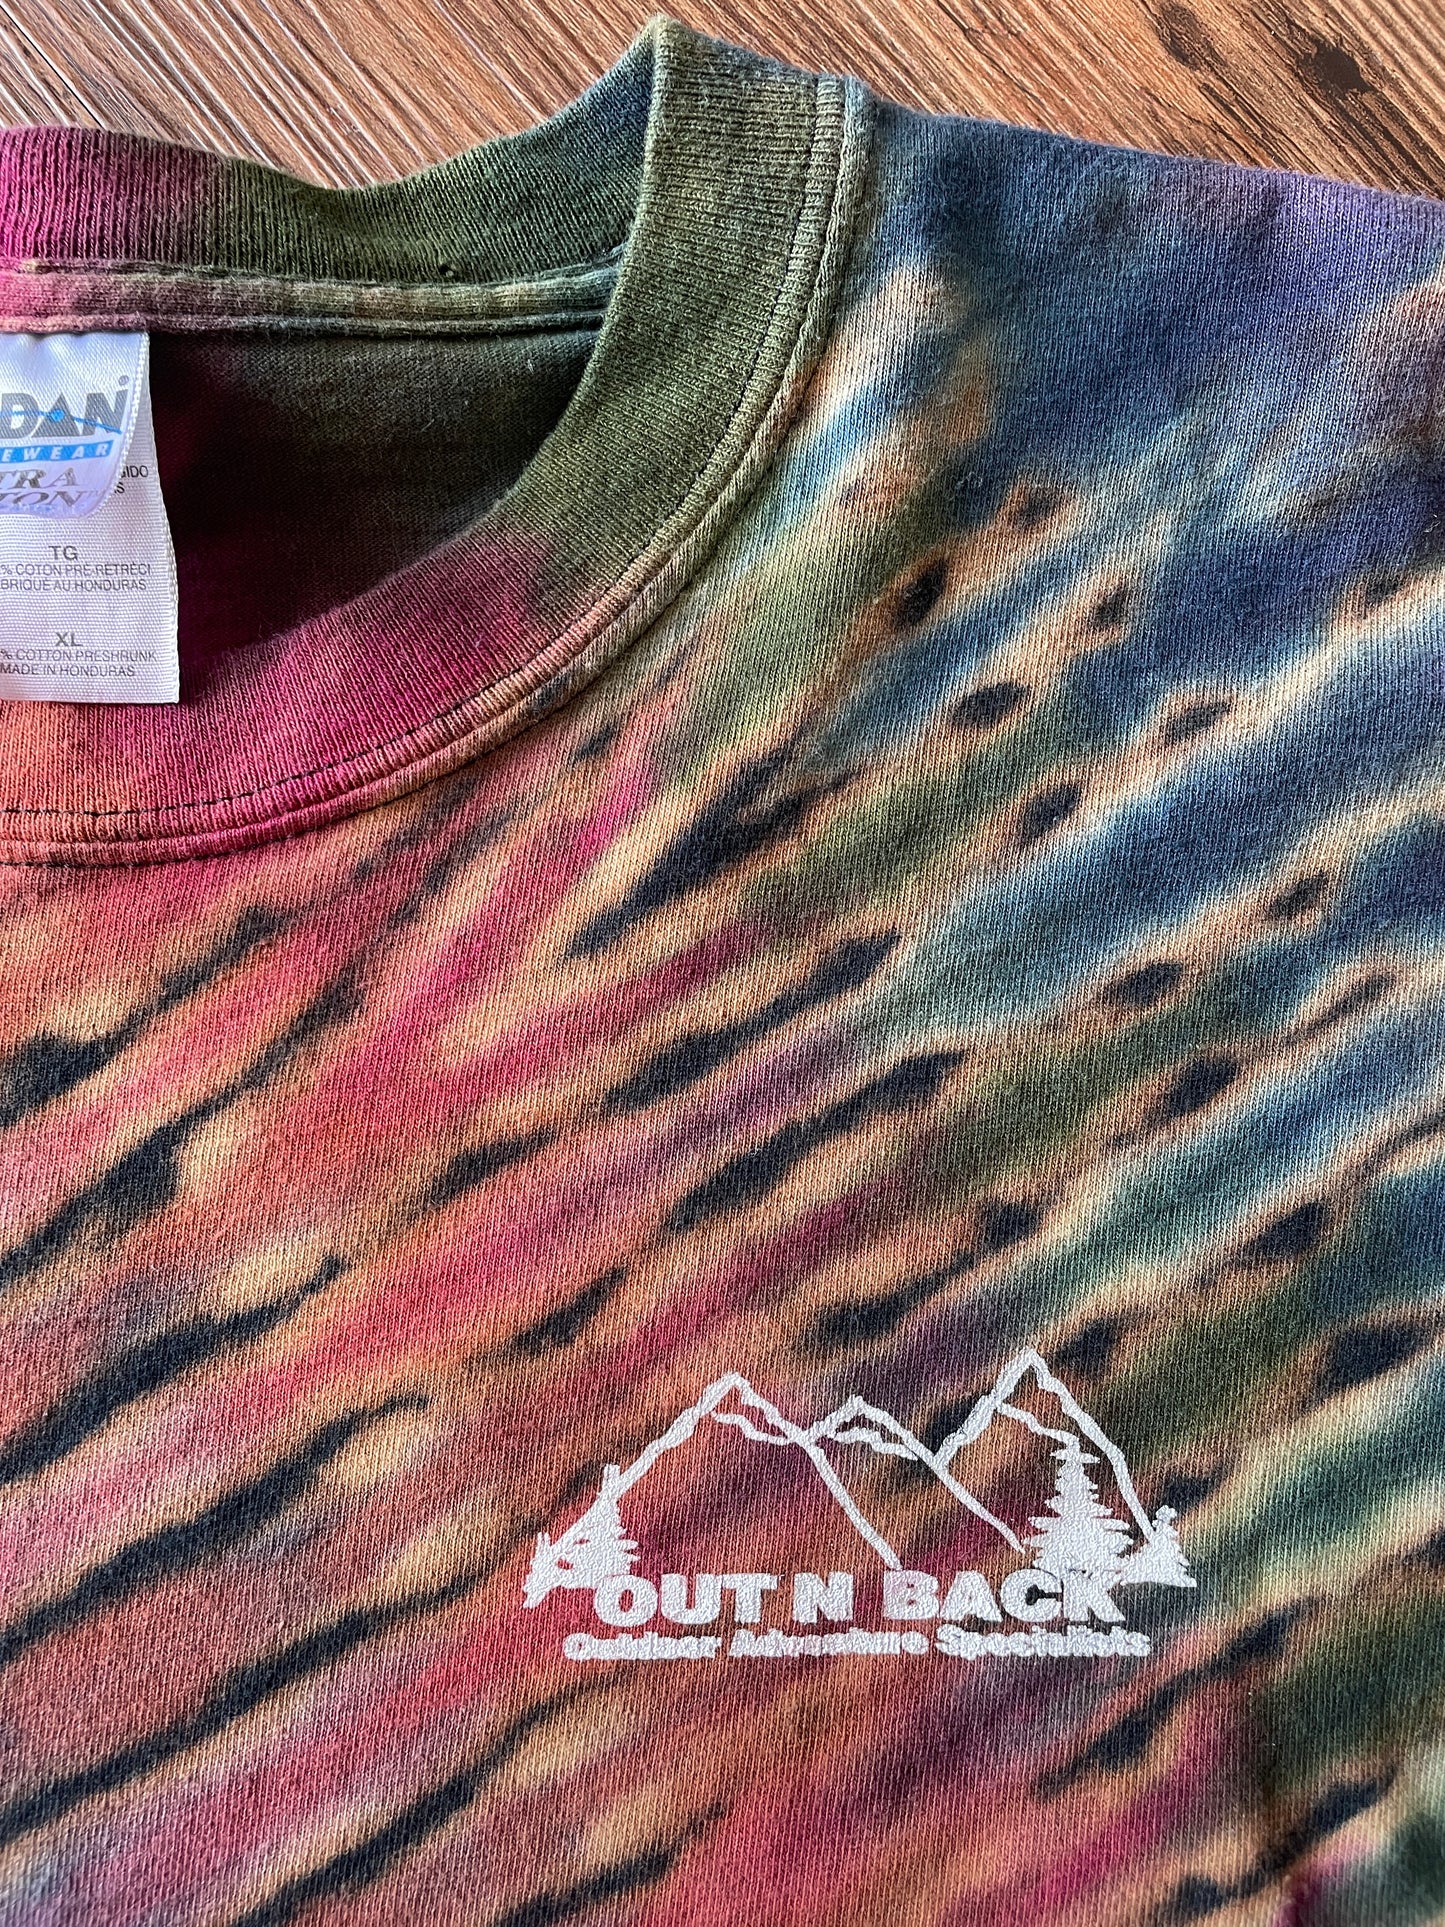 XL Men’s Out n Back Outdoor Adventure Specialists Handmade Tie Dye T-Shirt | Warm Tones Earth Tones Pleated Bleach Dye Short Sleeve